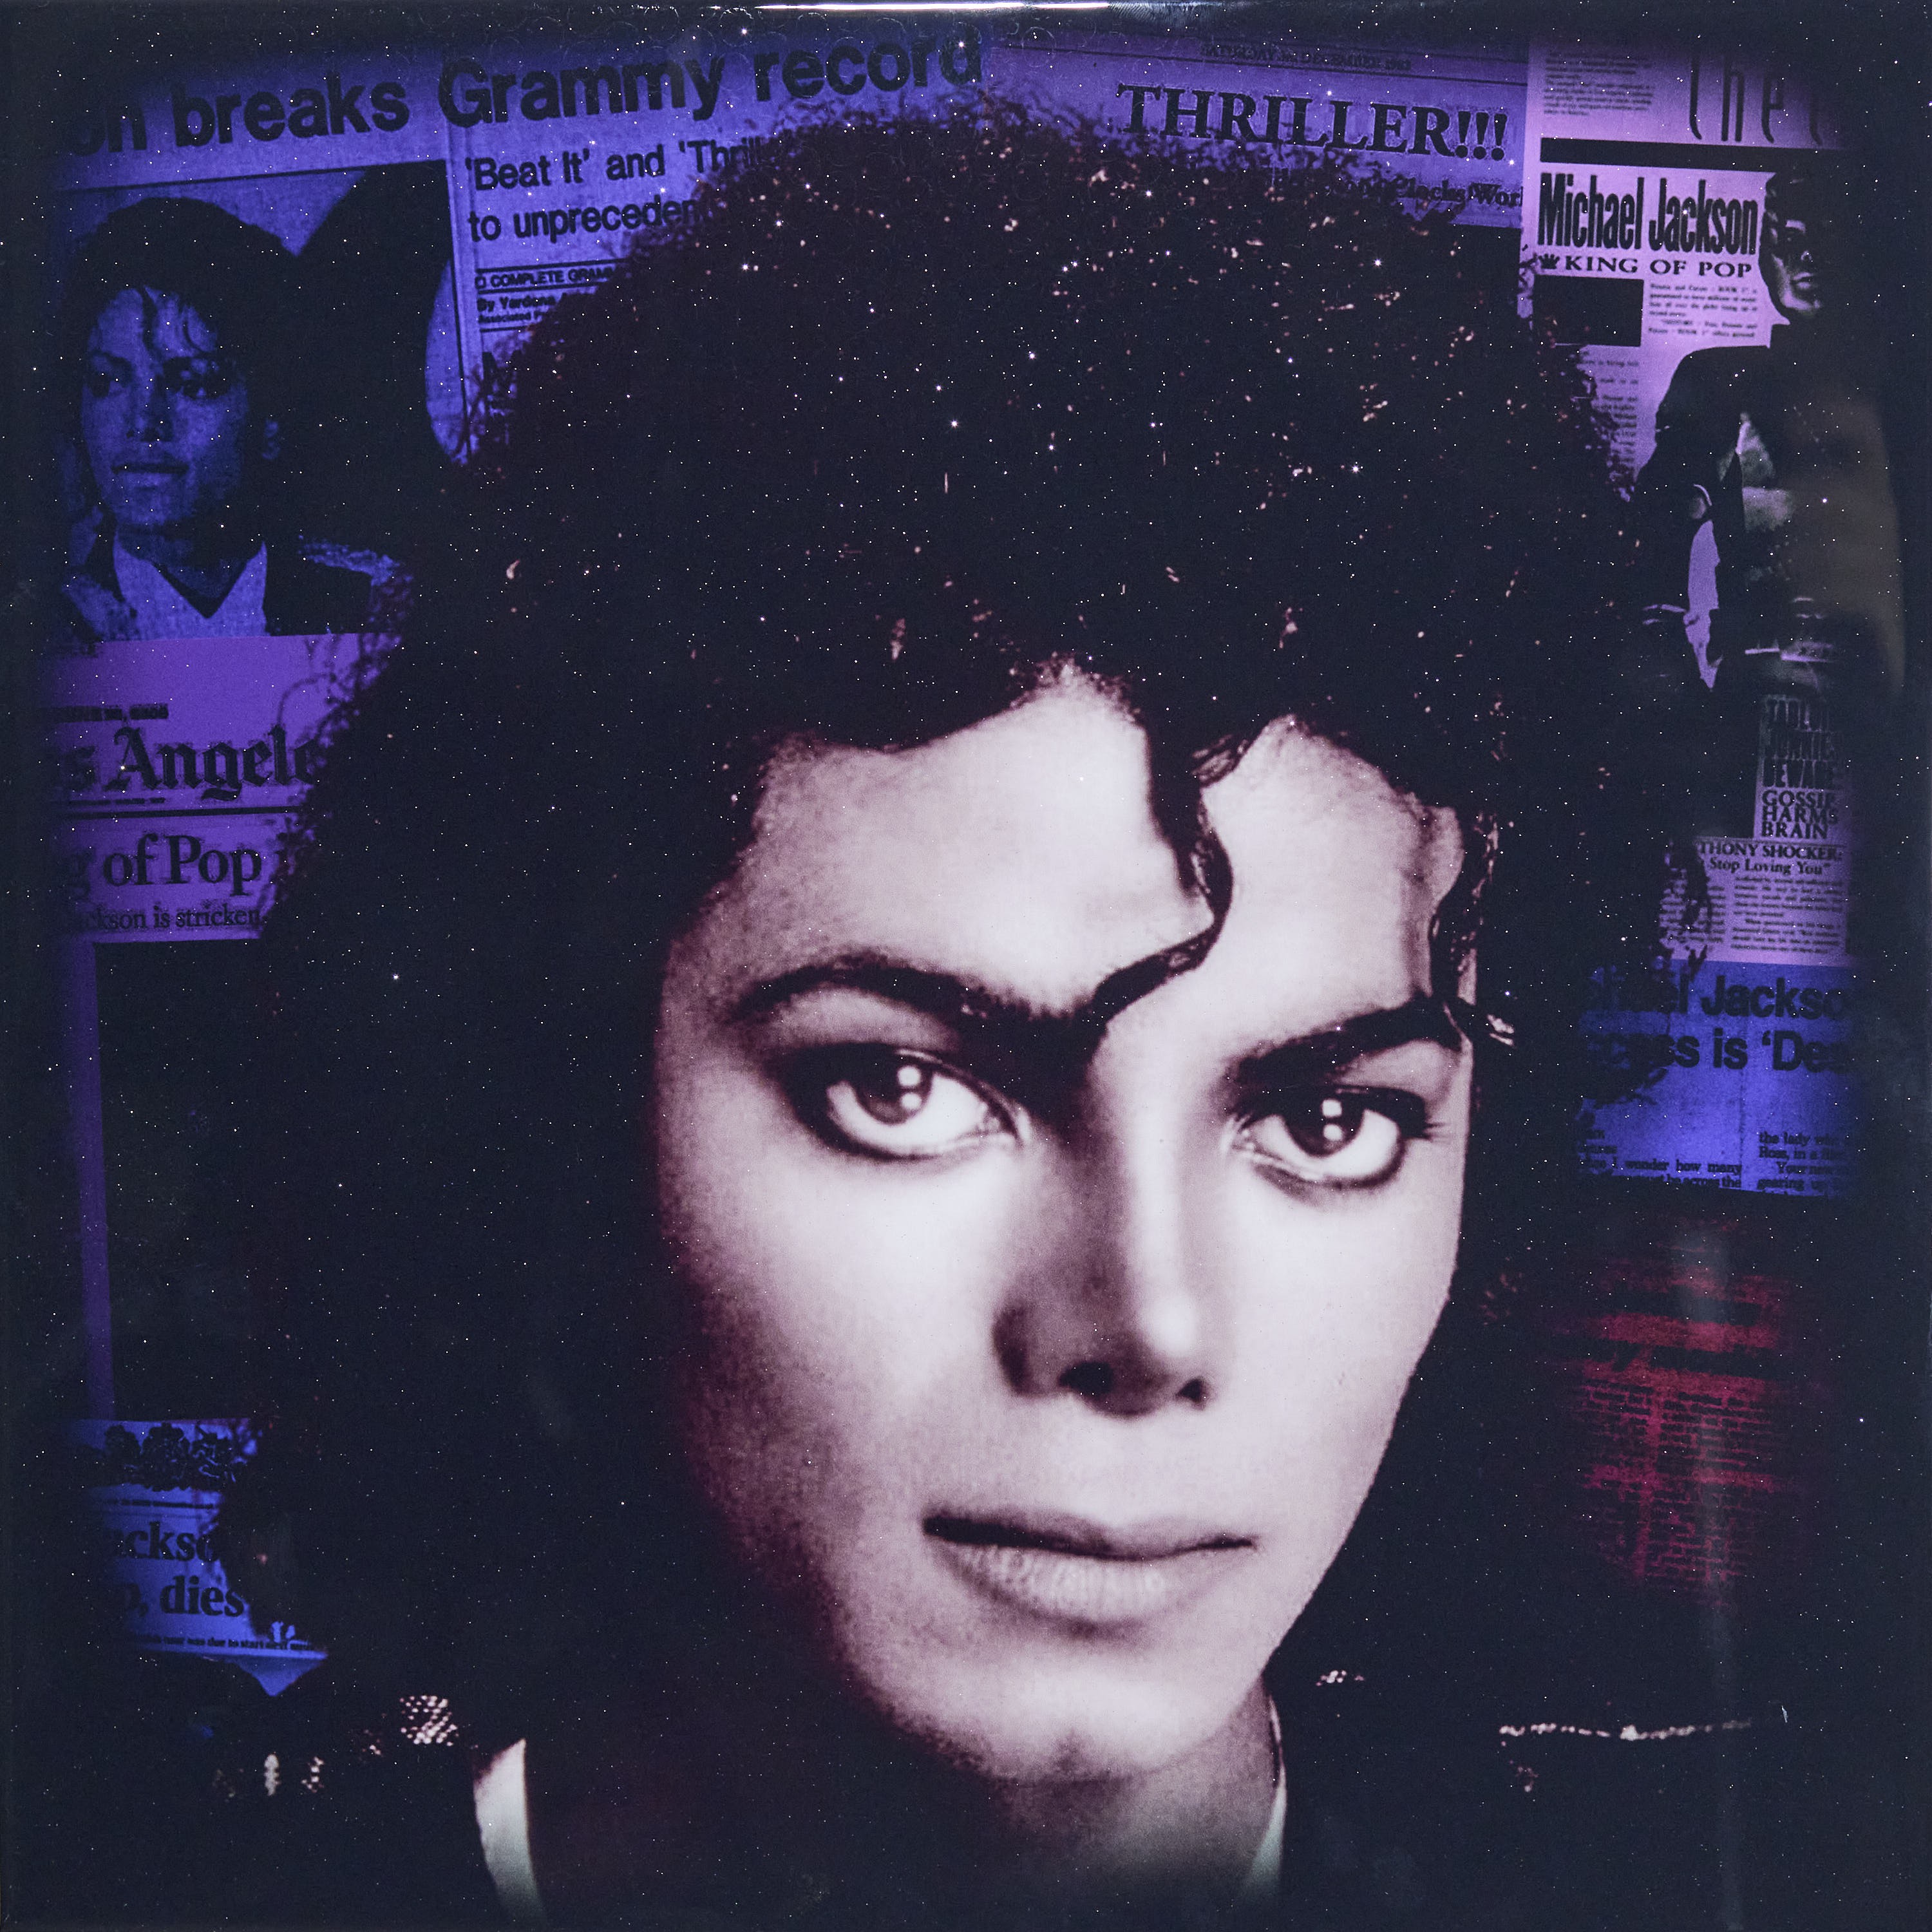 Michael Jackson THRILLER Original Poster Art Print -  Norway